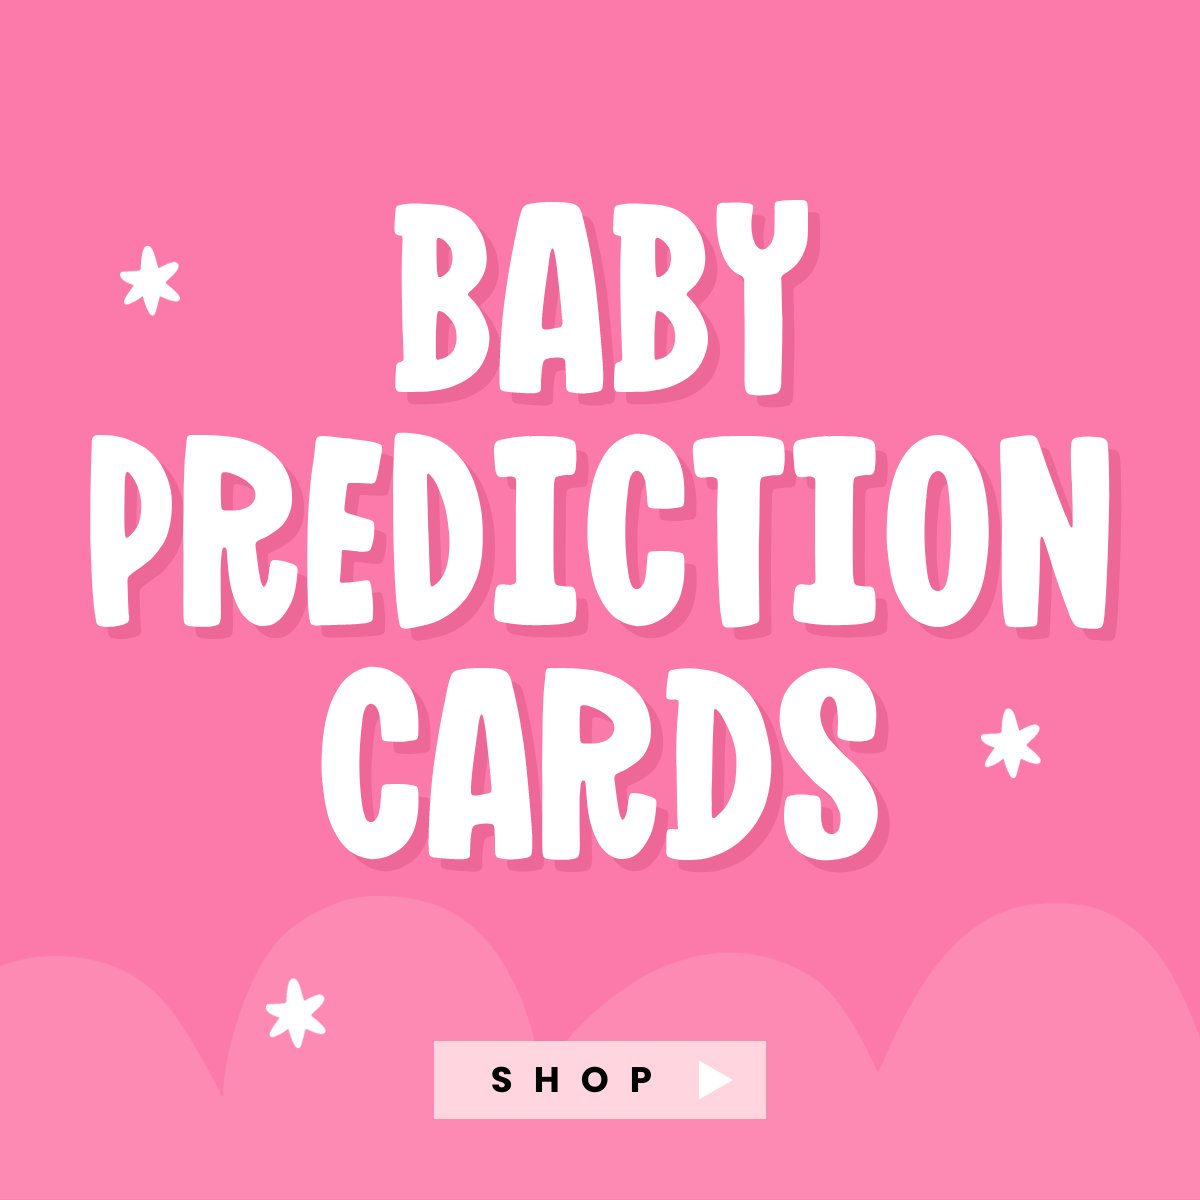 BABY PREDICTION CARDS